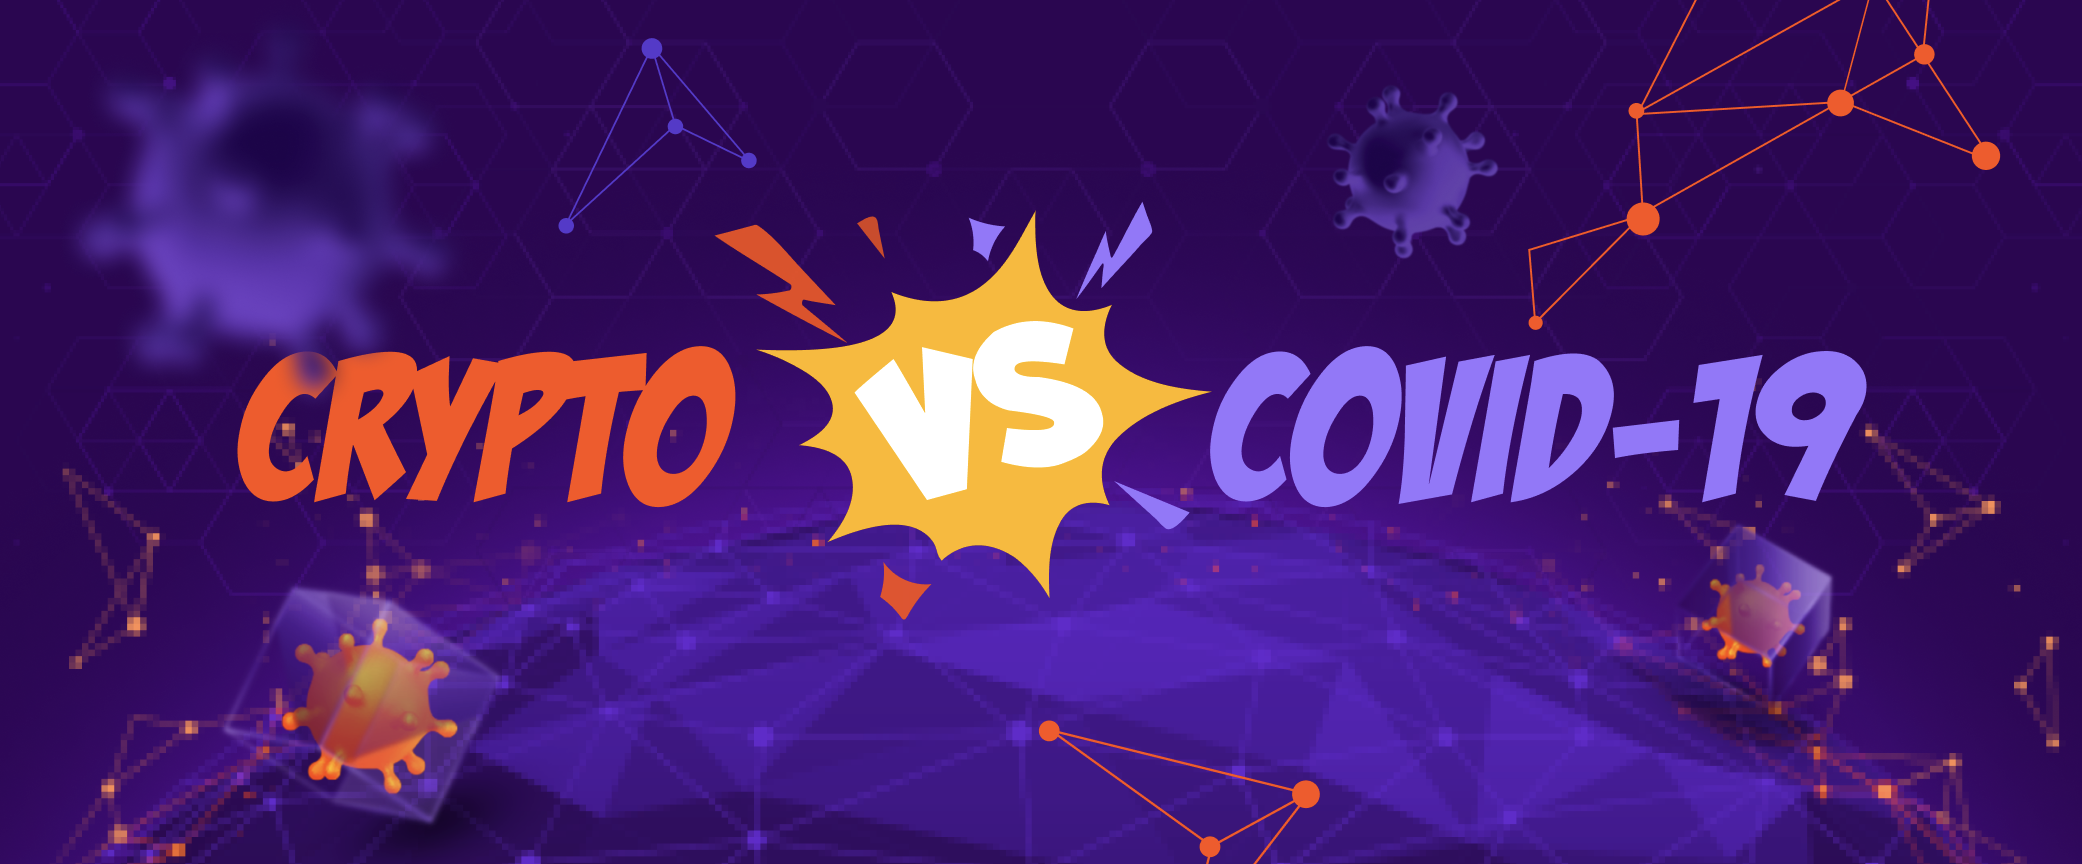 Crypto vs COVID-19: Bitcasino.io raises 20BTC donation and launches charity poker tournament